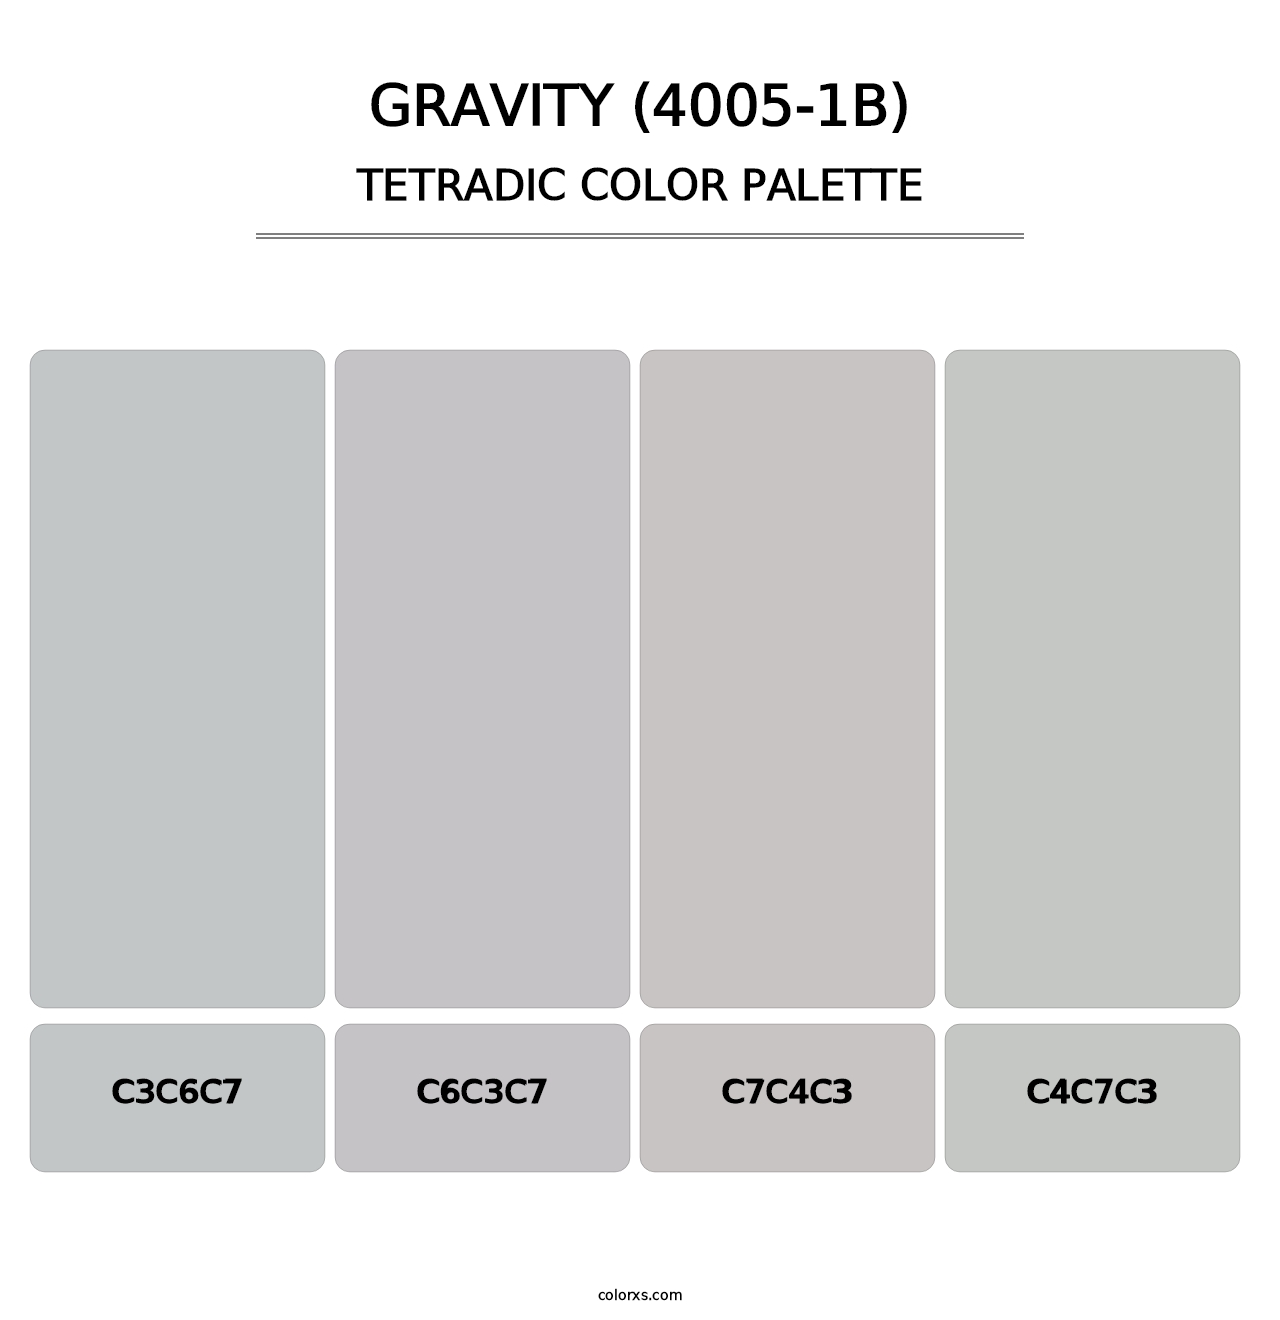 Gravity (4005-1B) - Tetradic Color Palette